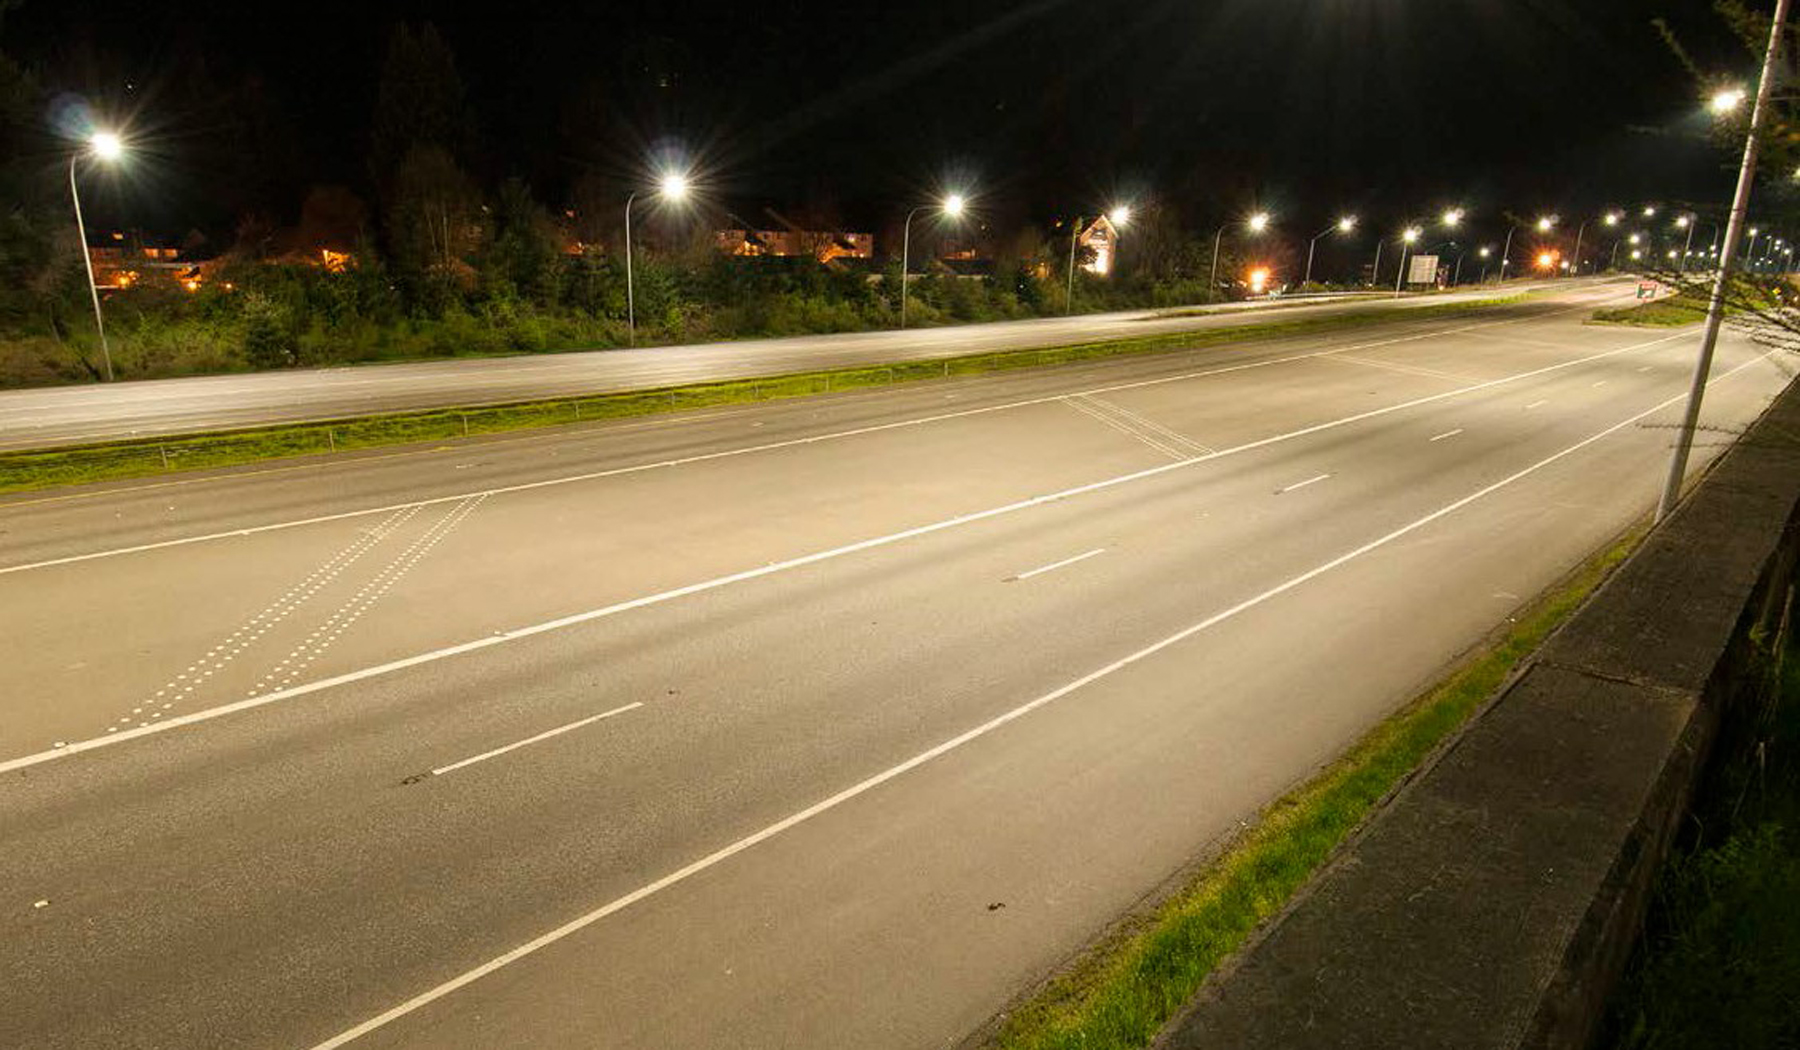 Illumination fixtures along a highway at night